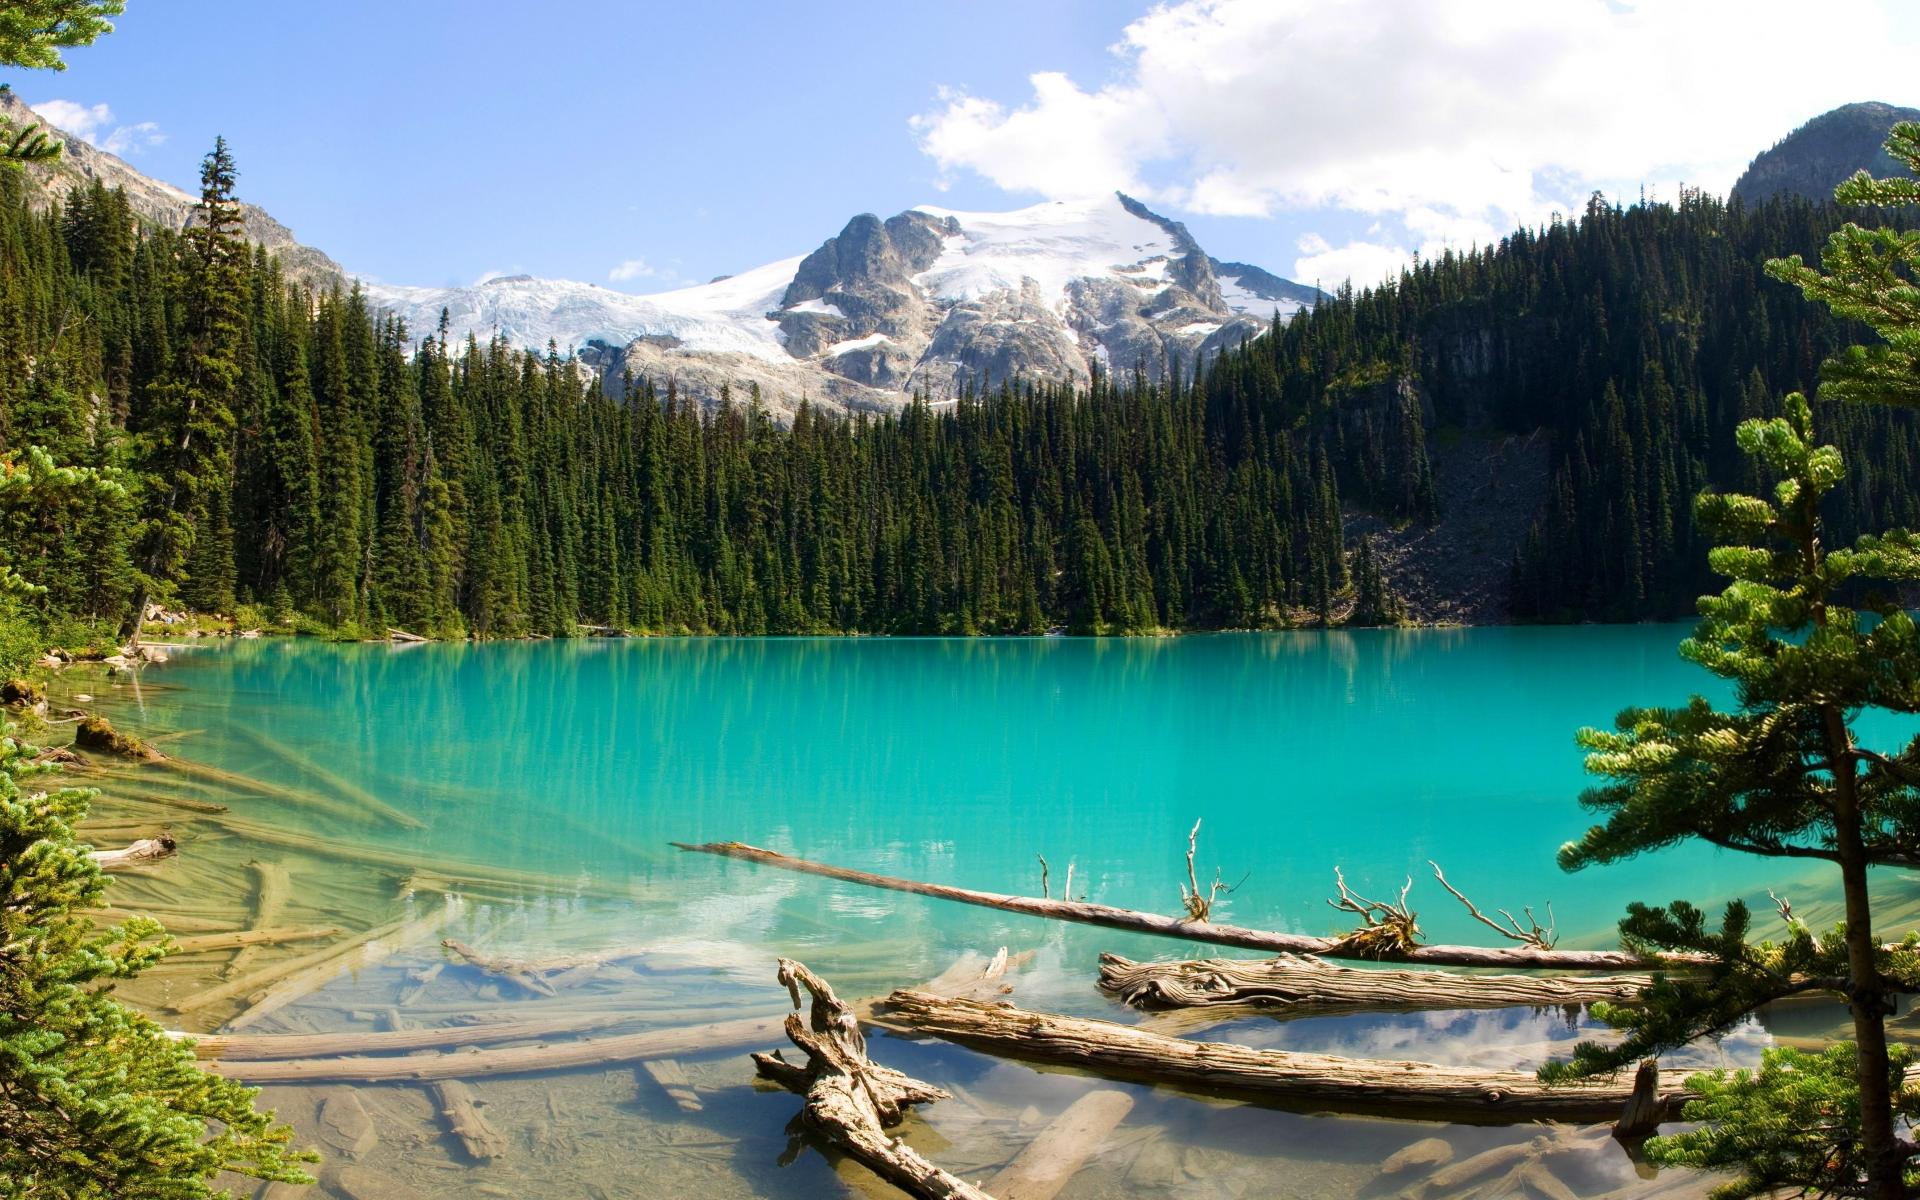 Water Canada Turquoise British Columbia Mountain Snowy Peak Landscape